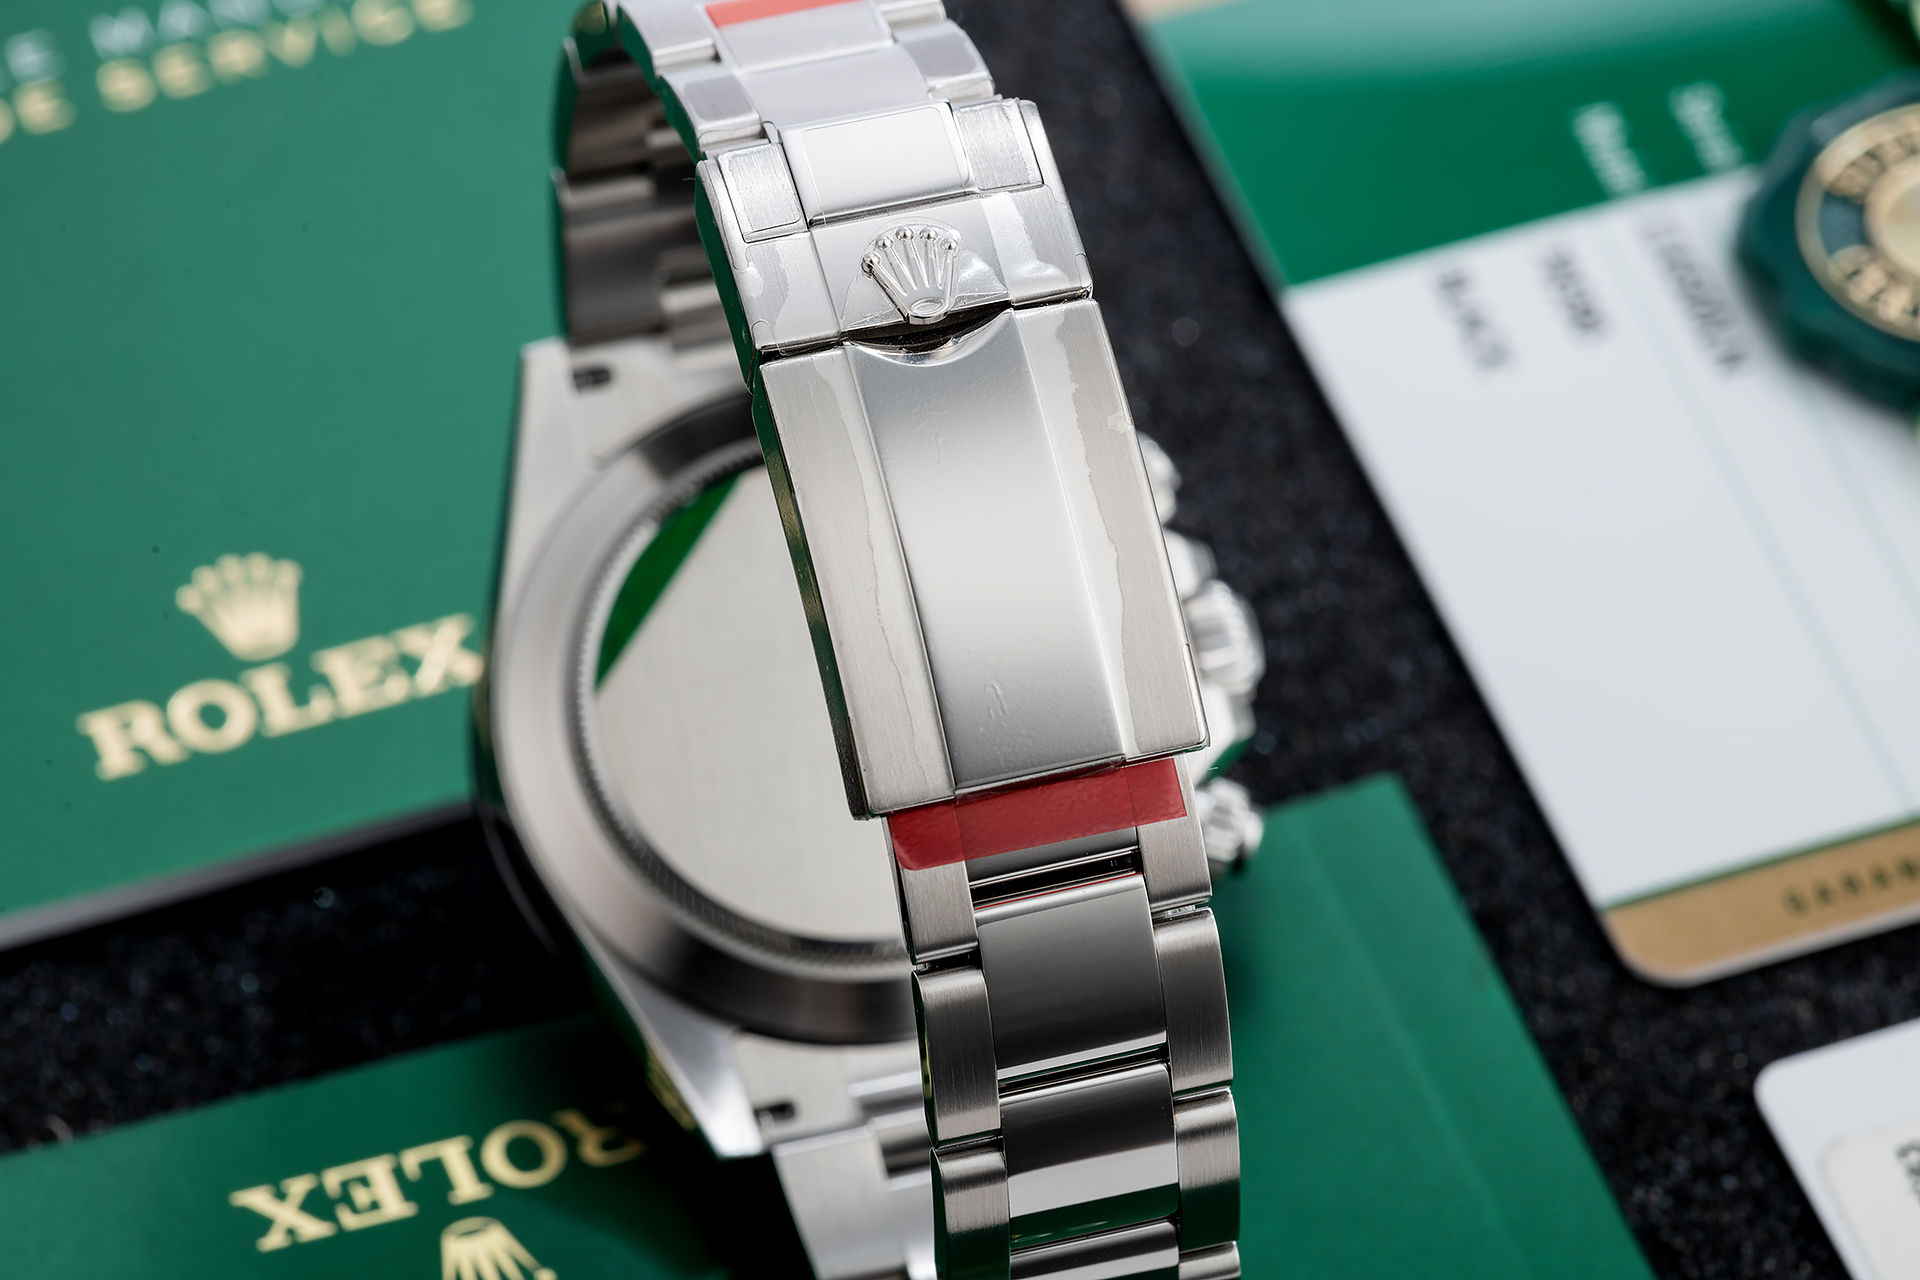 ref 116500LN | Box & Certificate | Rolex Cosmograph Daytona